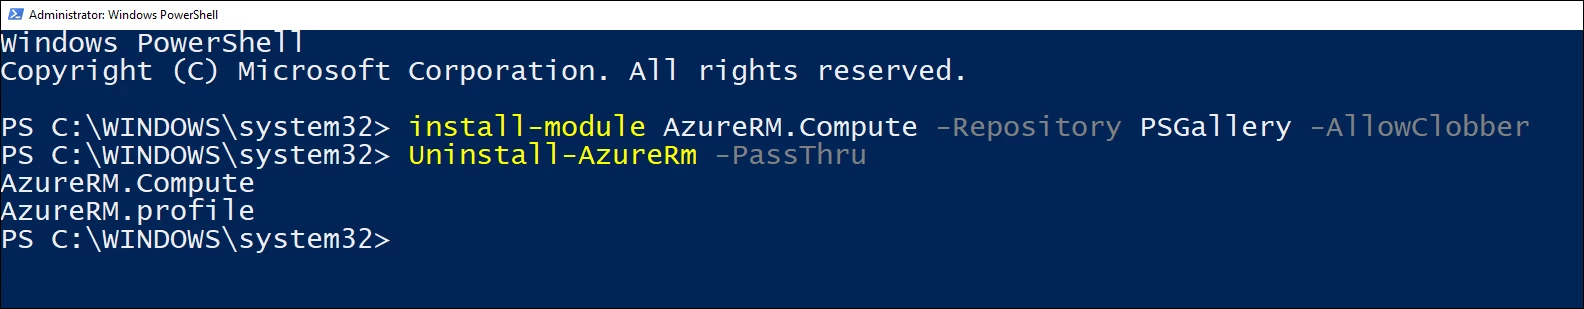 Screenshot of PowerShell session where Uninstall-AzureRm cmdlet was run. 